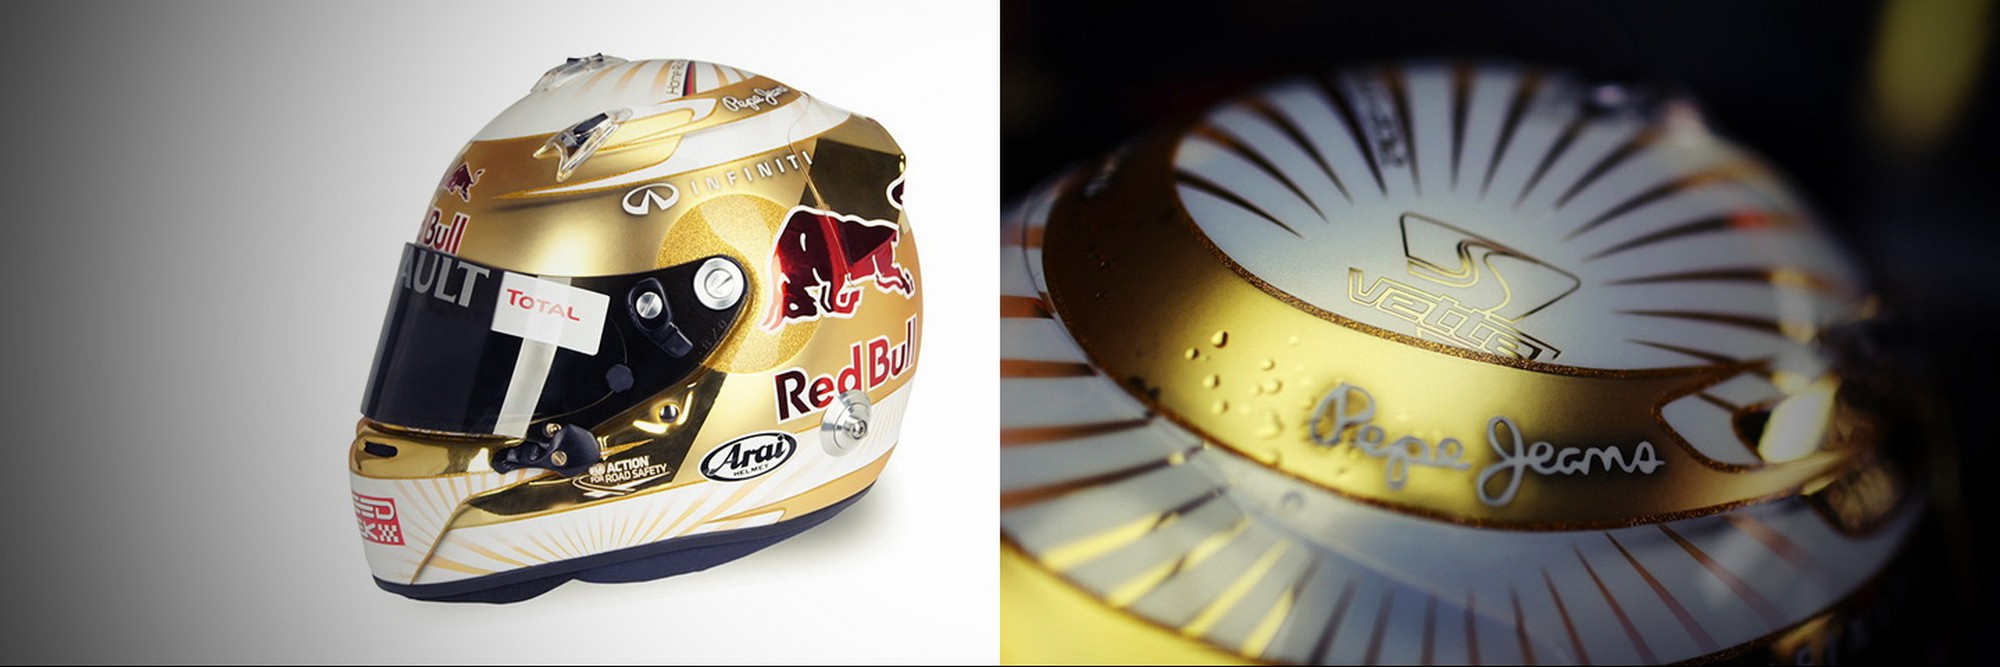 Шлем Себастьяна Феттеля на Гран-При Германии 2012 | 2012 German Grand Prix helmet of Sebastian Vettel